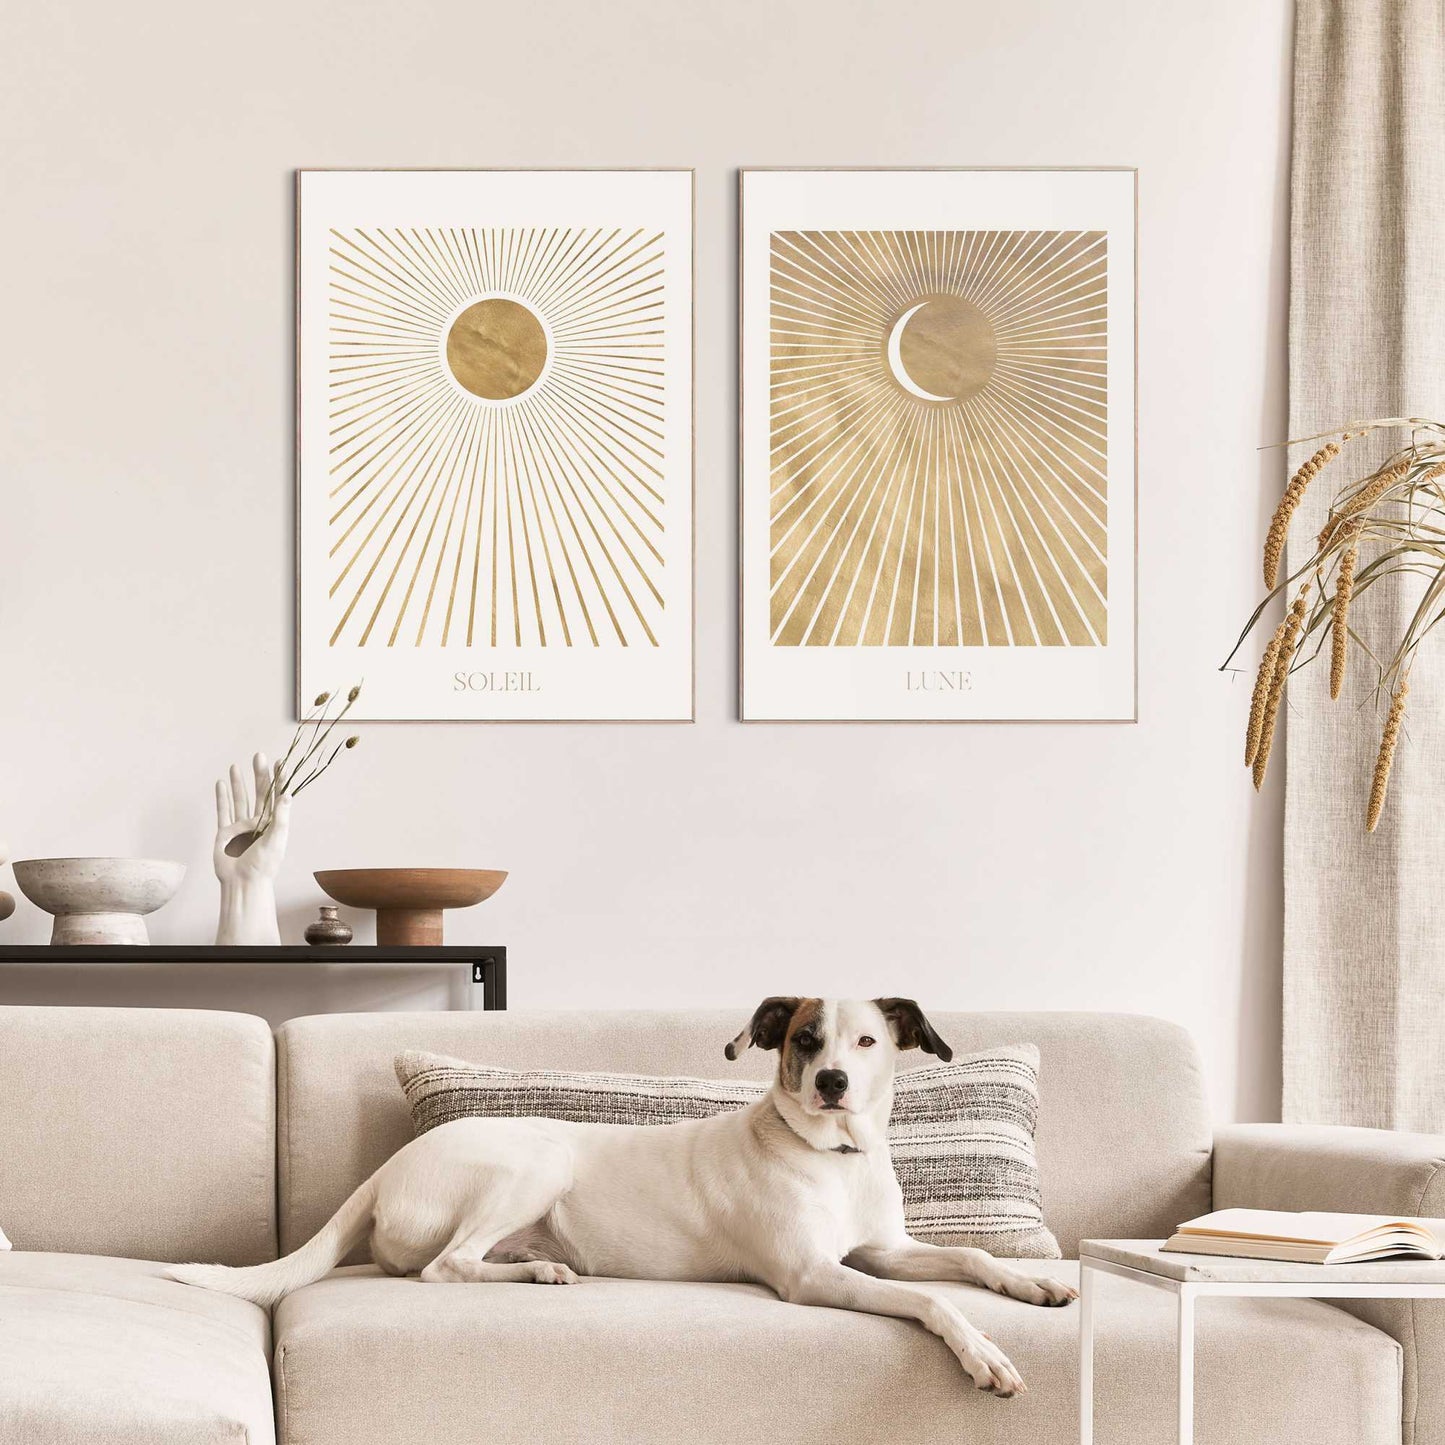 Framed in Wood Soleil Lune 70x50